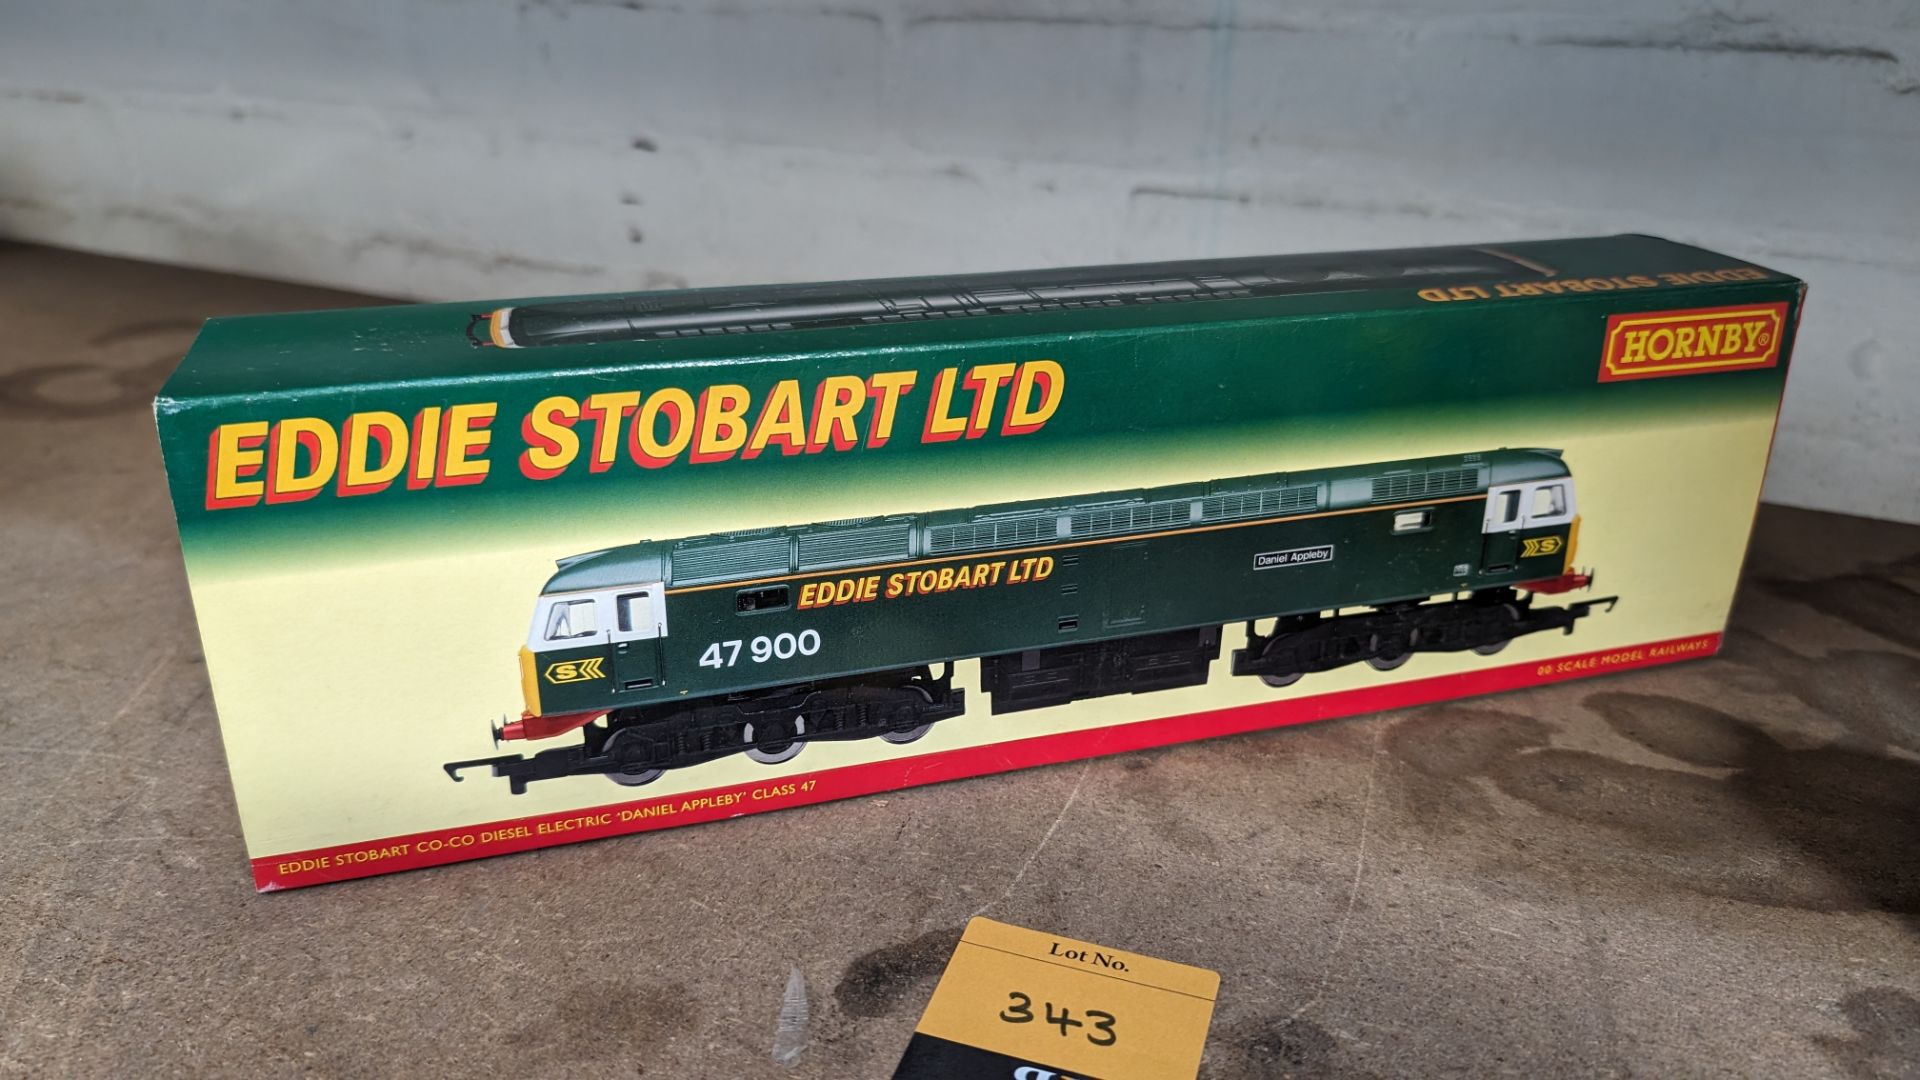 Hornby 00 scale model train 47 900, Eddie Stobart co-co diesel electric "Daniel Appleby" Class 47 - Image 6 of 7